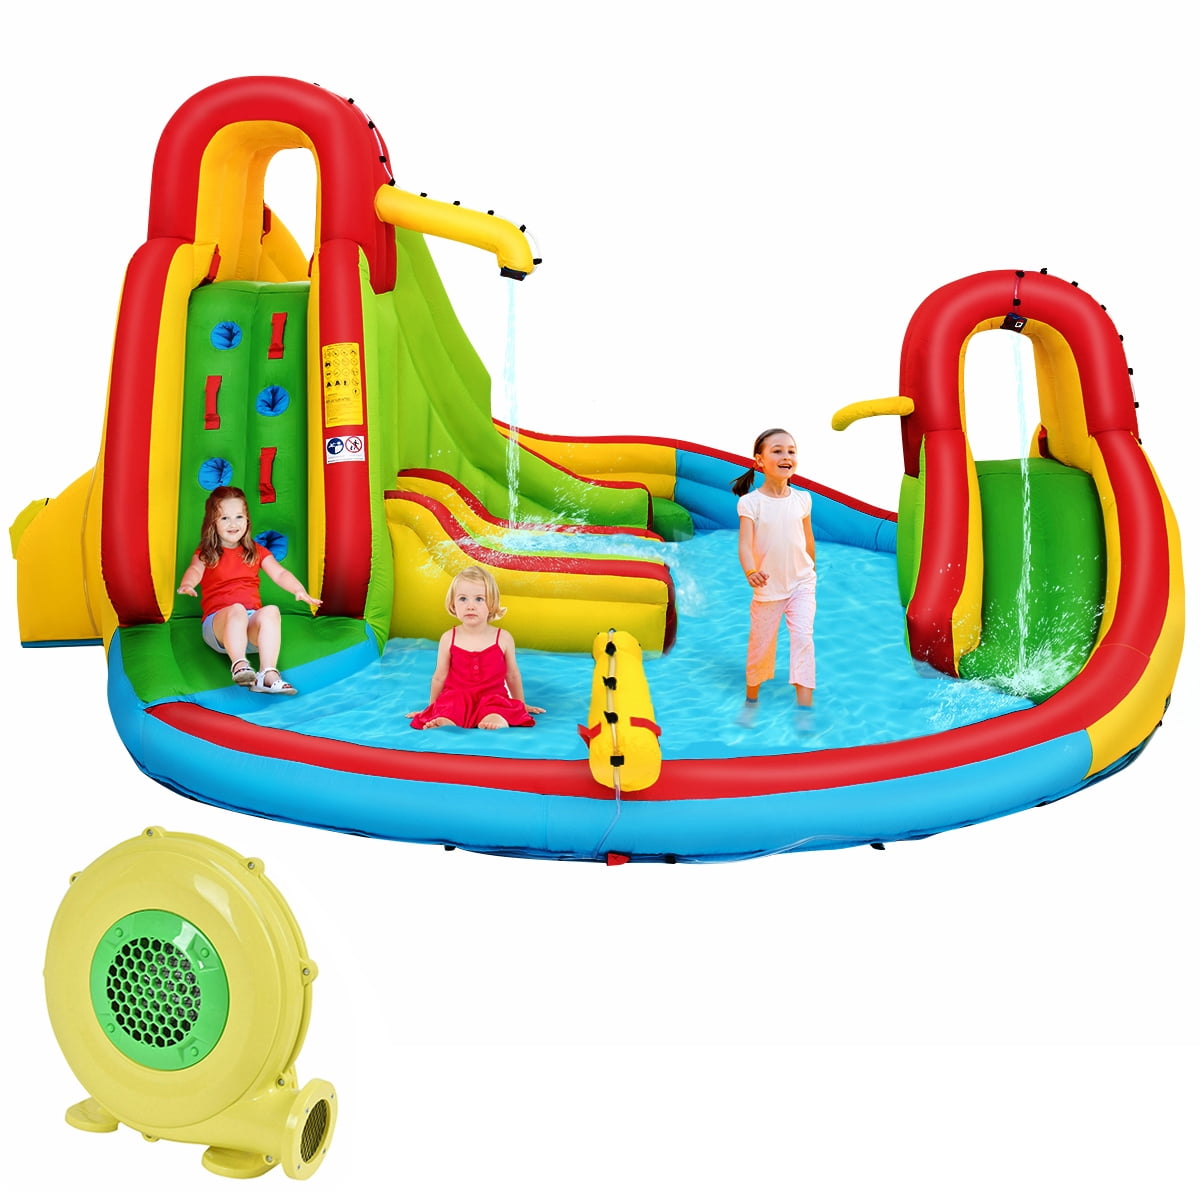 Intex Kool Splash Inflatable Pool Slide Play Center with Sprayer Red 2 Pack